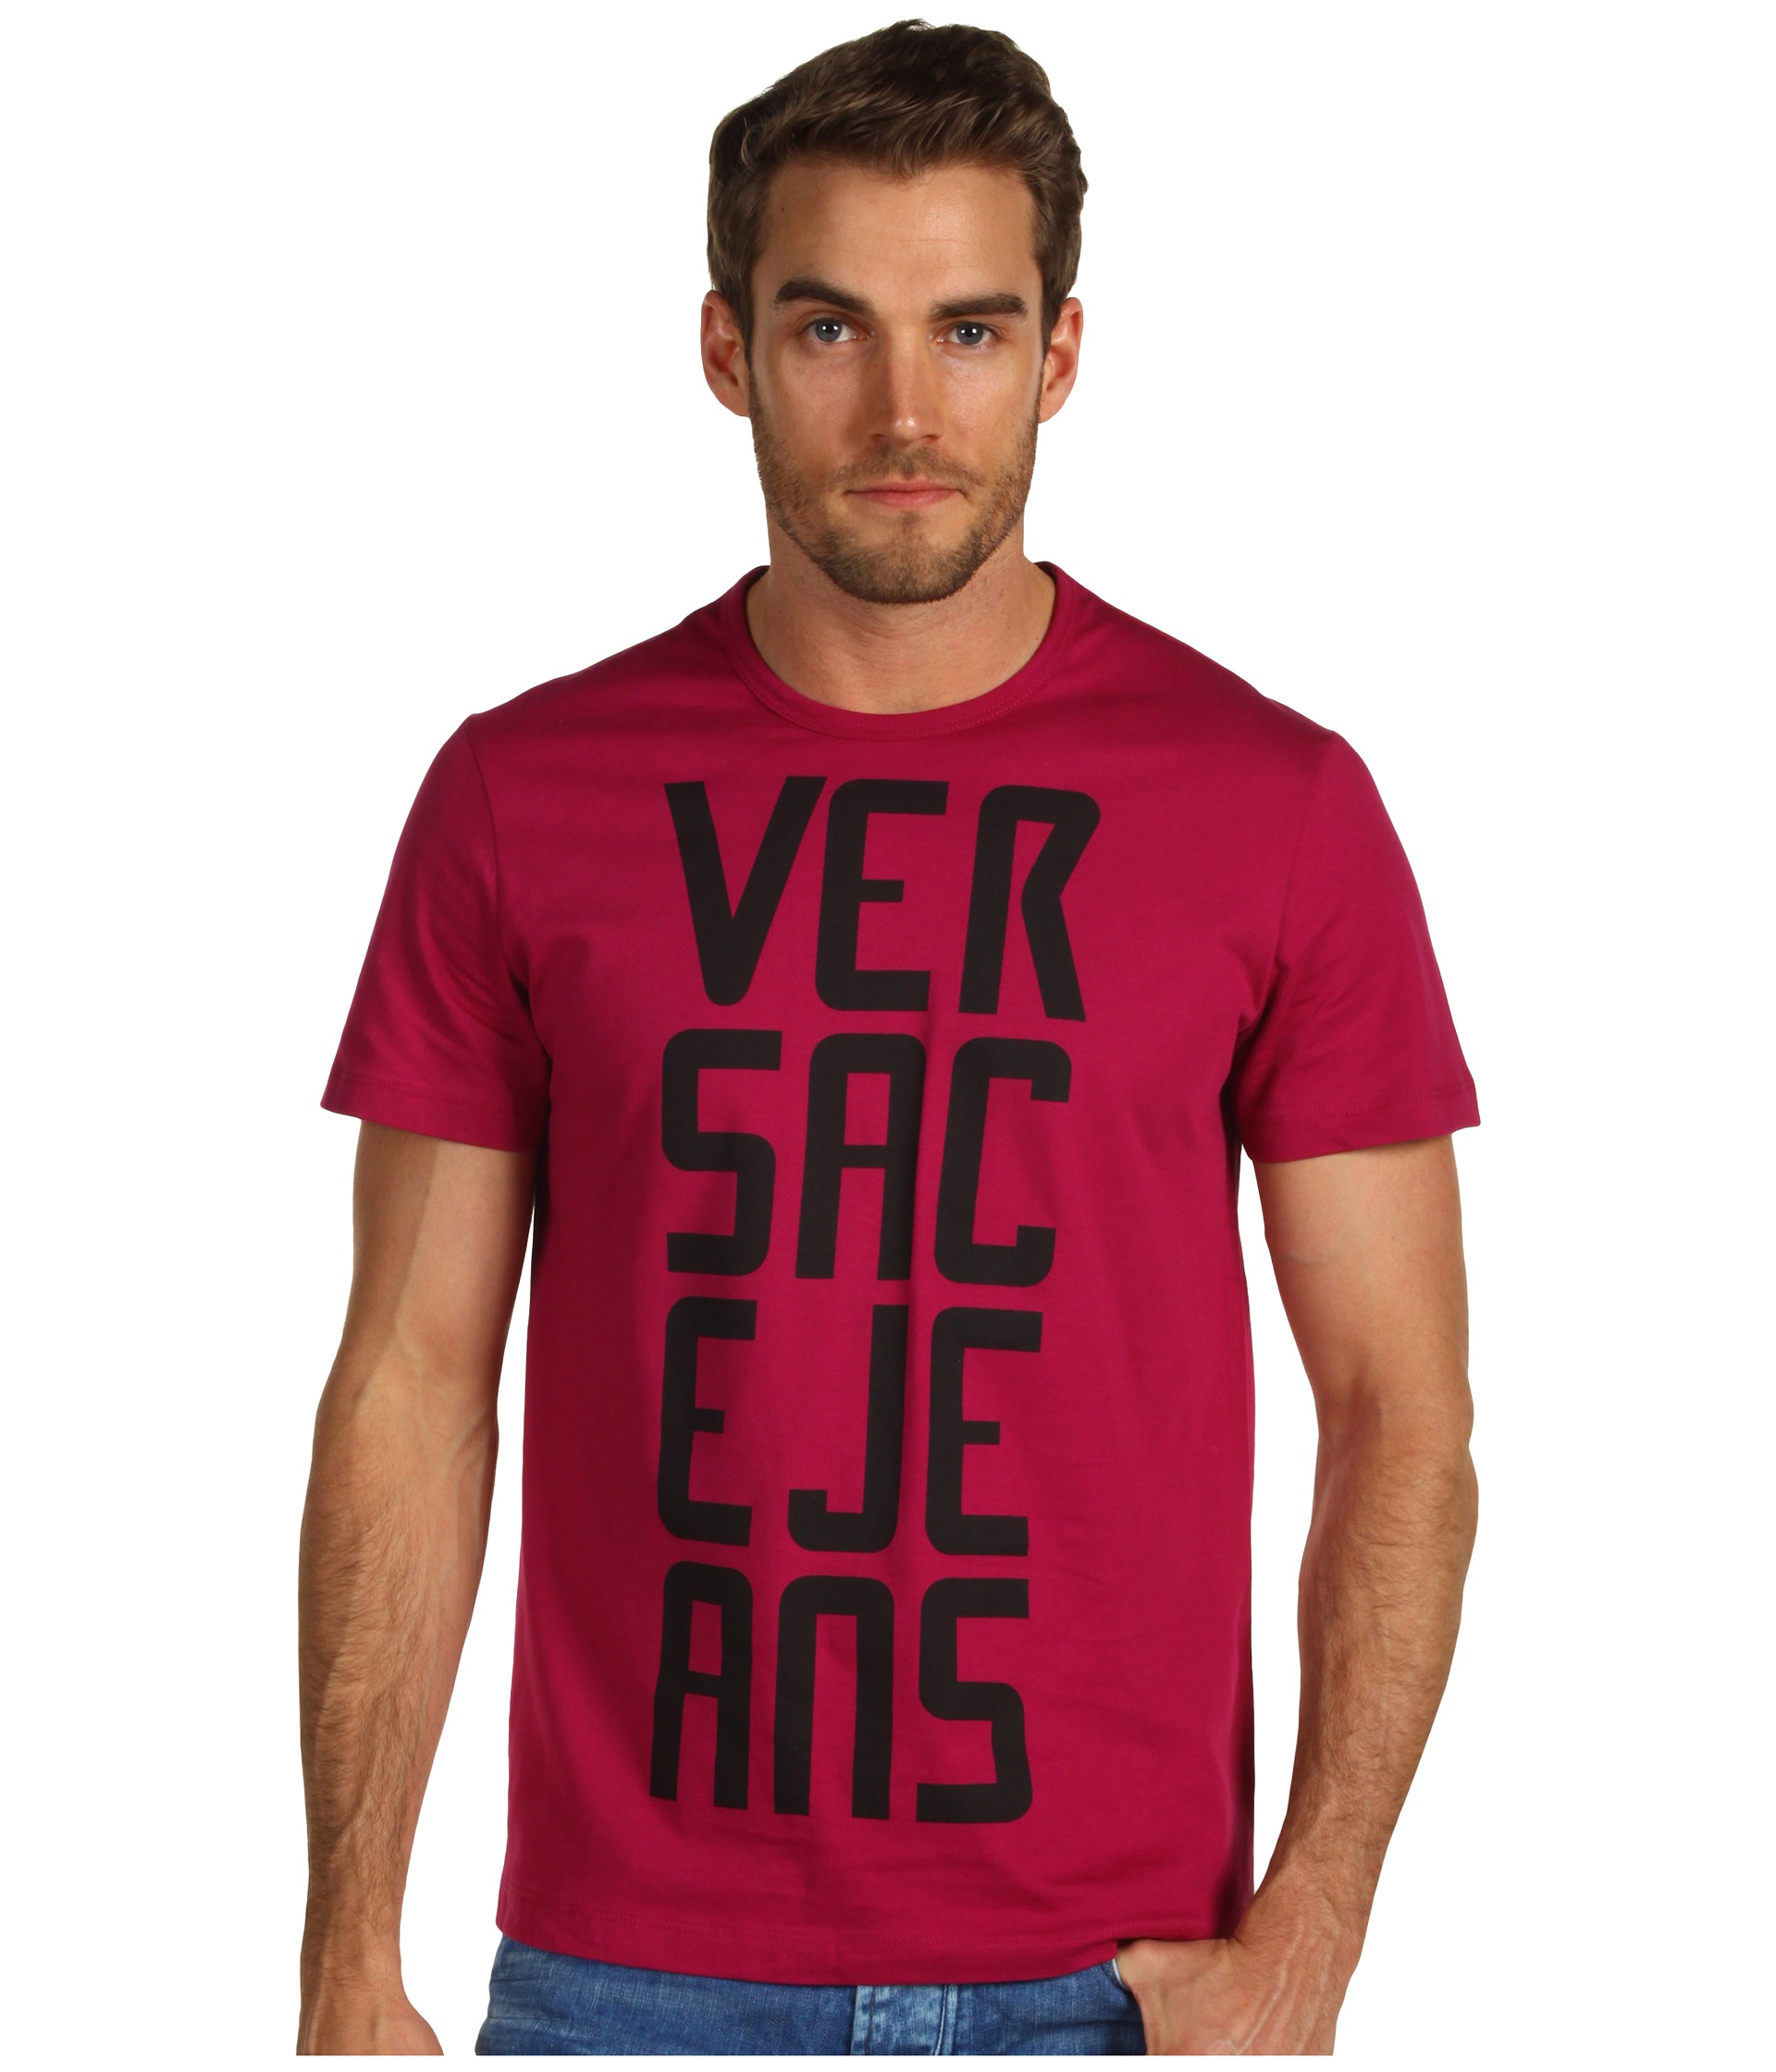 Versace Jeans Short Sleeve Logo Tee SKU #7940094